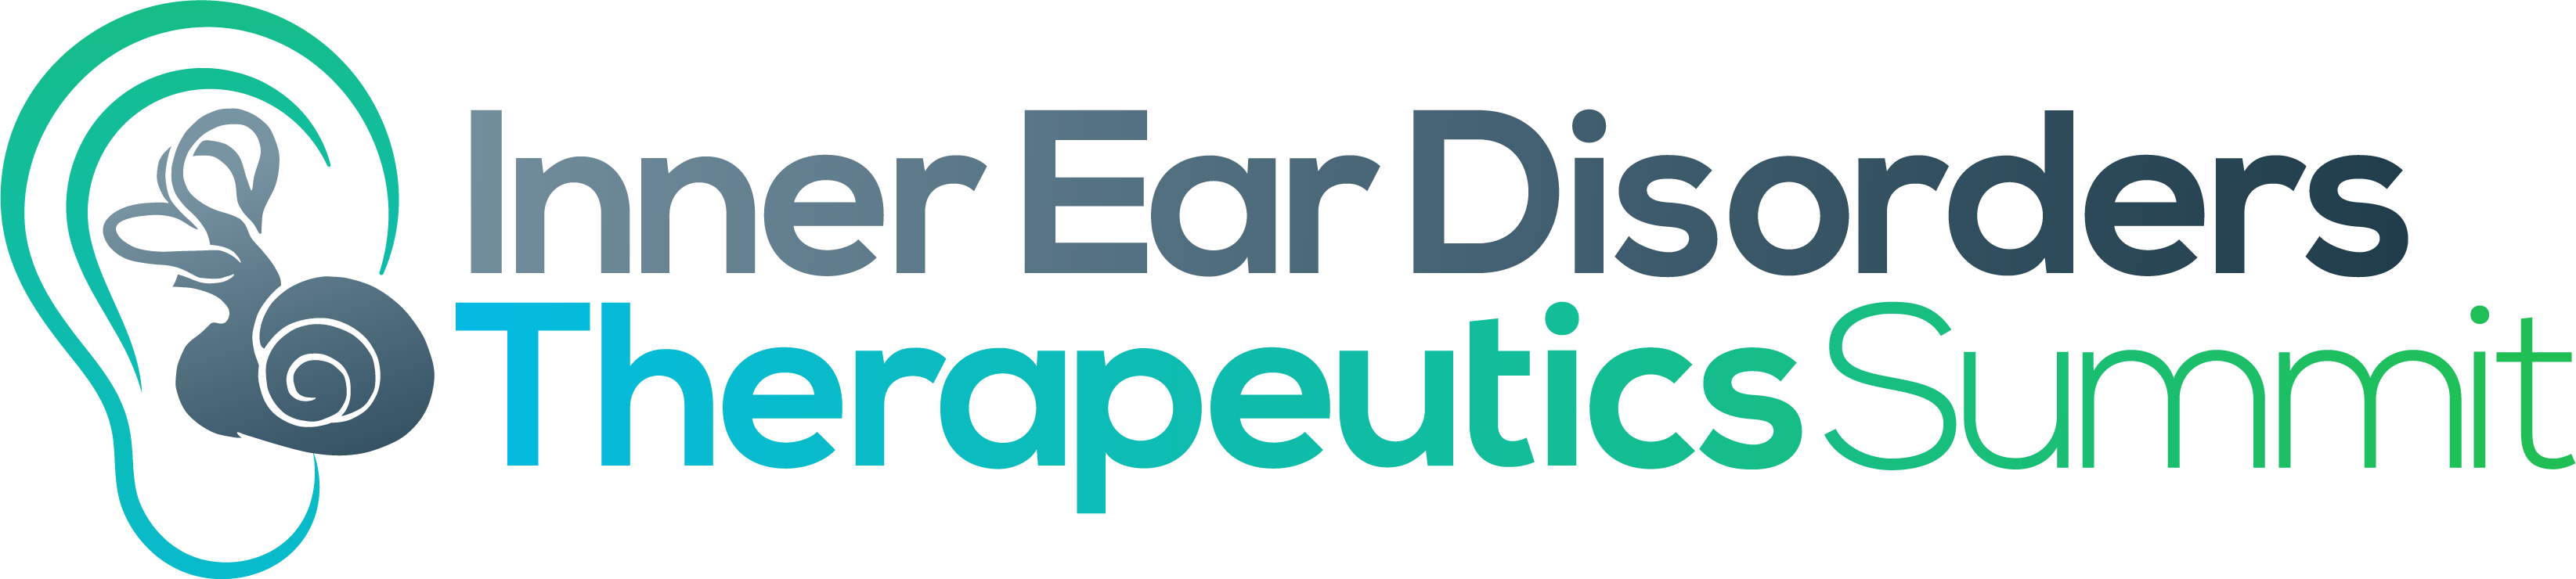 21026 - Inner Ear Disorders Therapeutics Logo